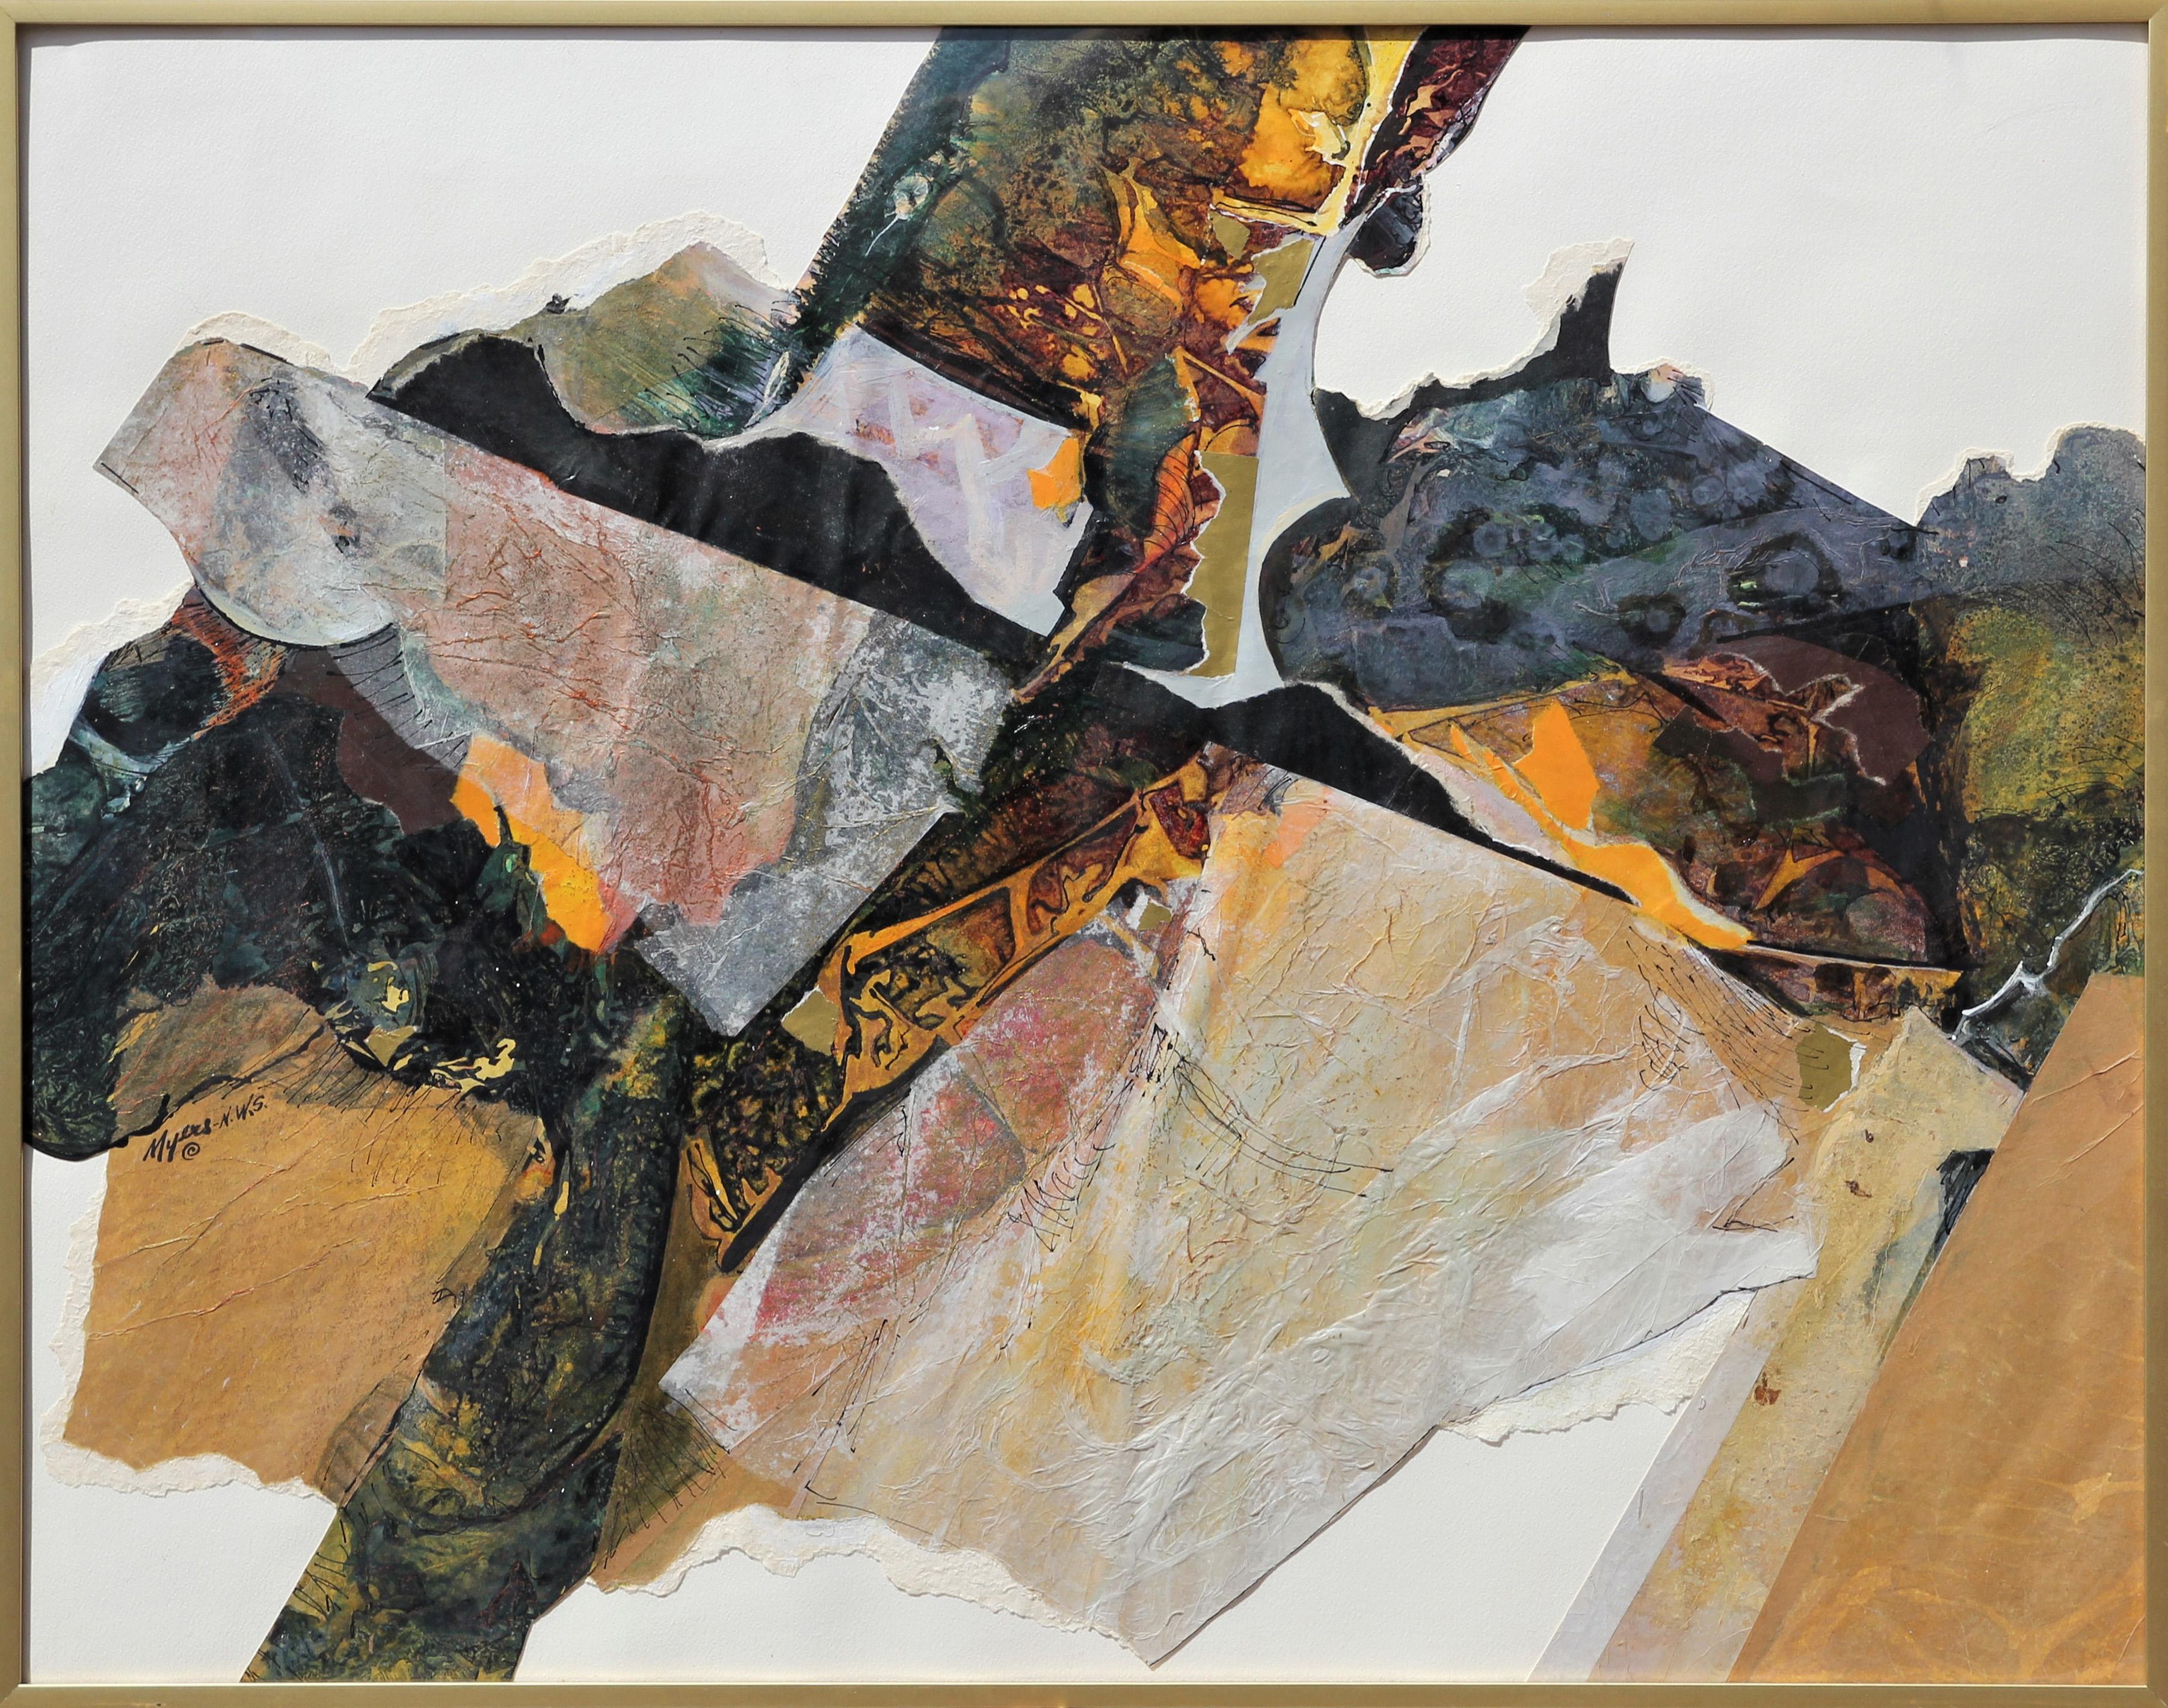 Abstract Painting Carole Myers - ""Fragments" Peinture moderne texturée de supports mixtes abstraits et neutres